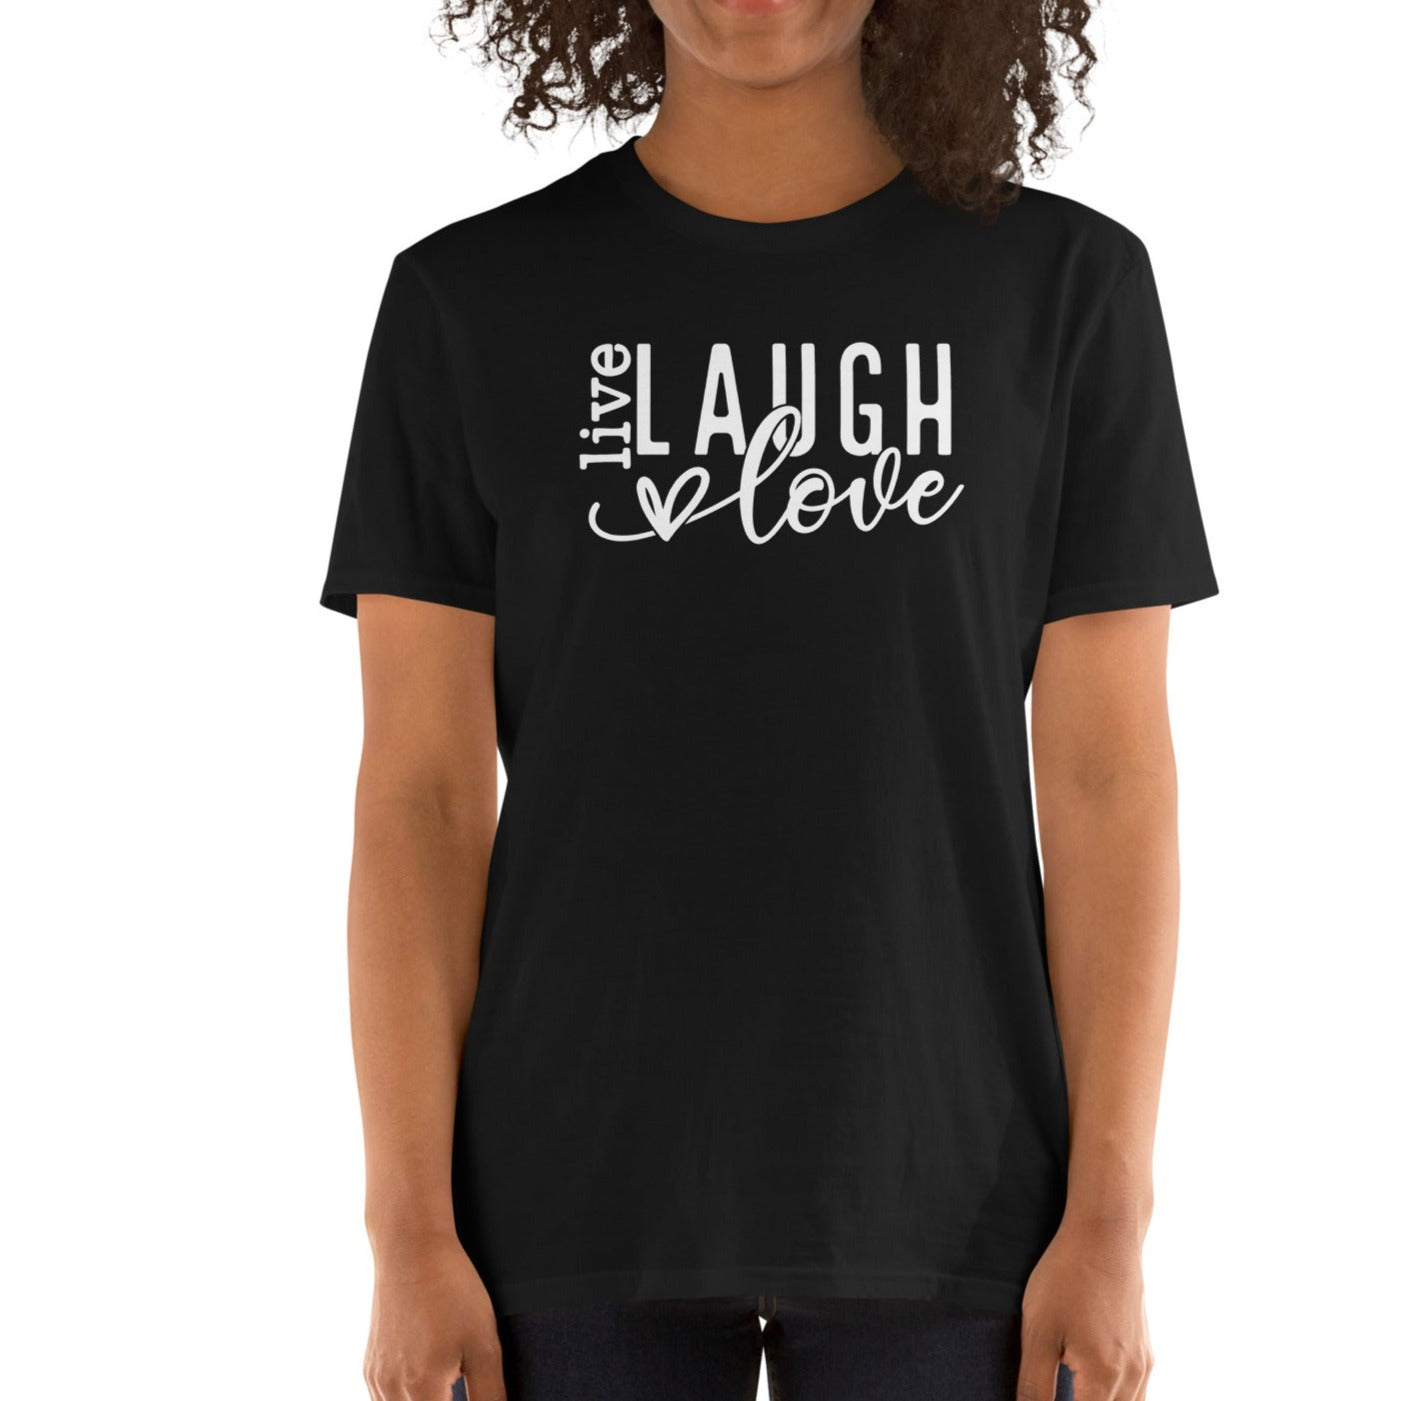 Unisex marškinėliai: Laugh, love, live